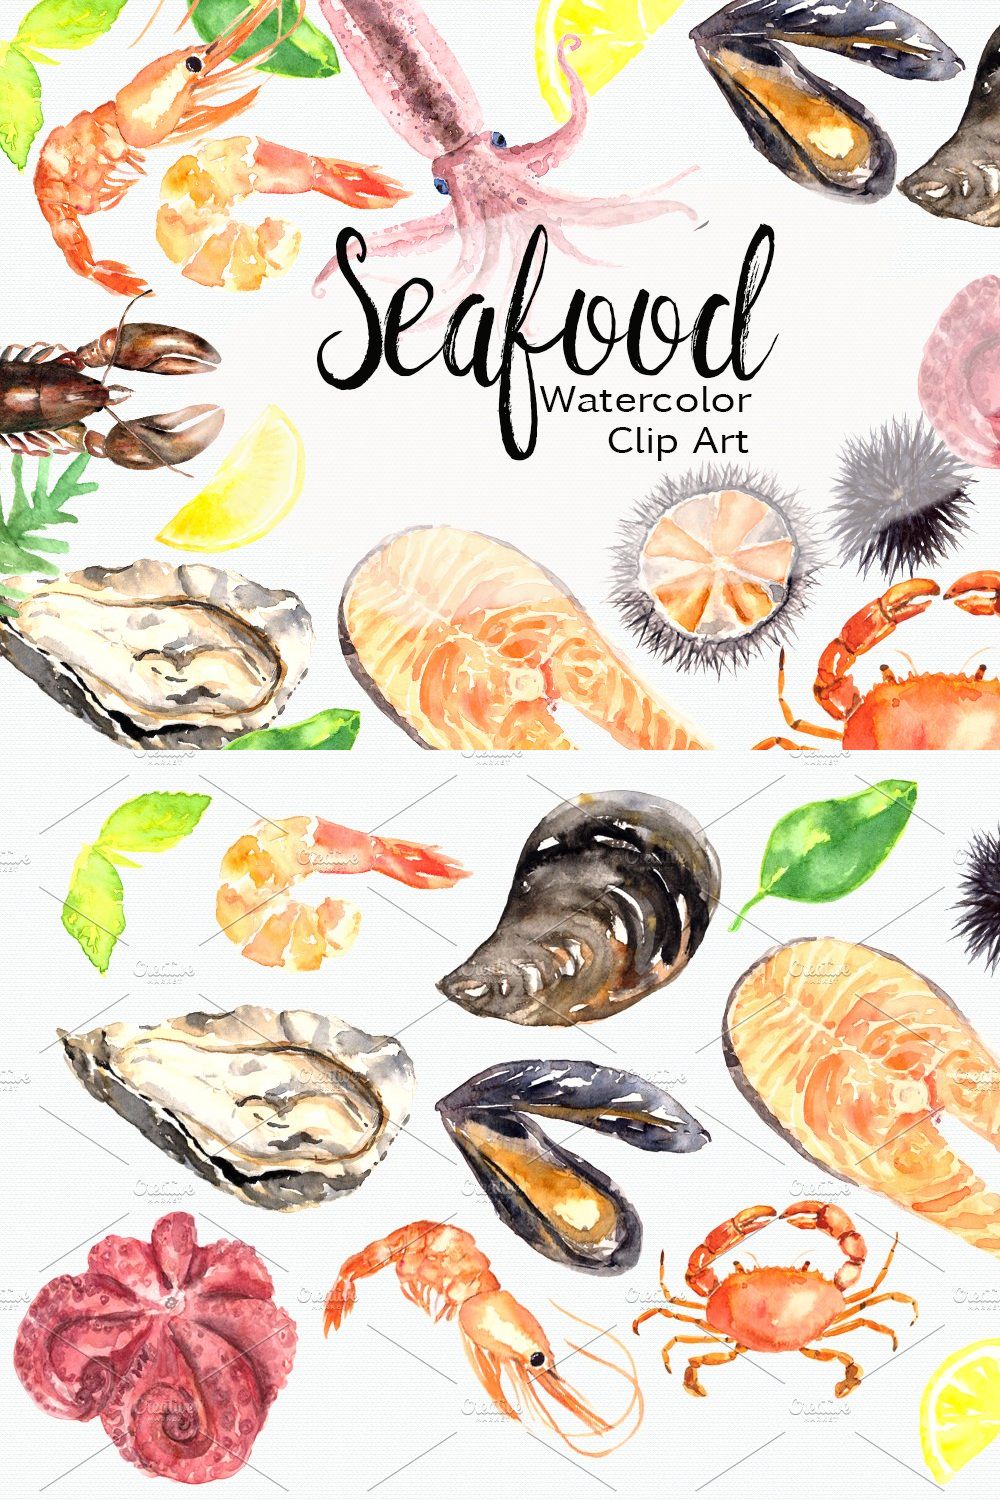 Watercolor Seafood Clip Art Set pinterest preview image.